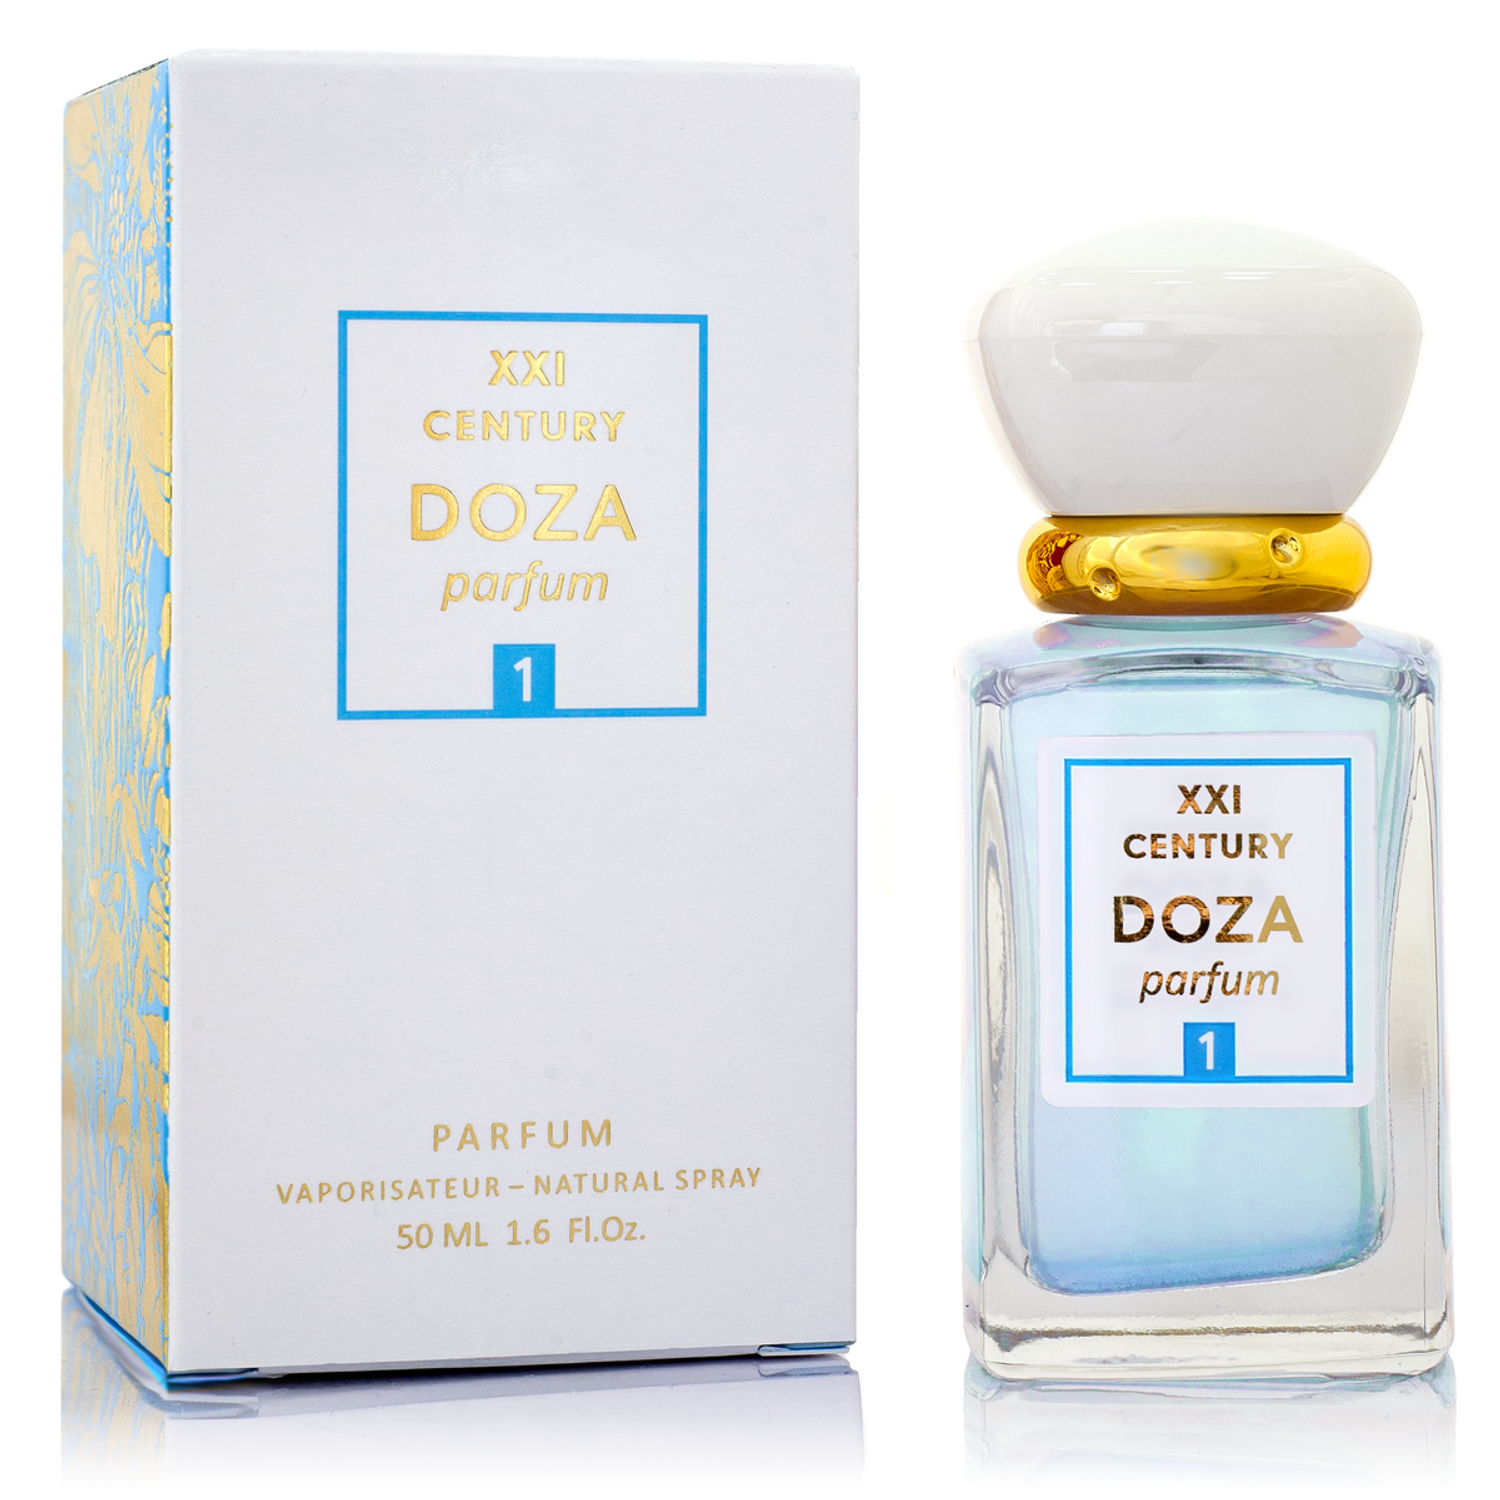 Духи XXI CENTURY DOZA parfum №1 50 мл - фото 2